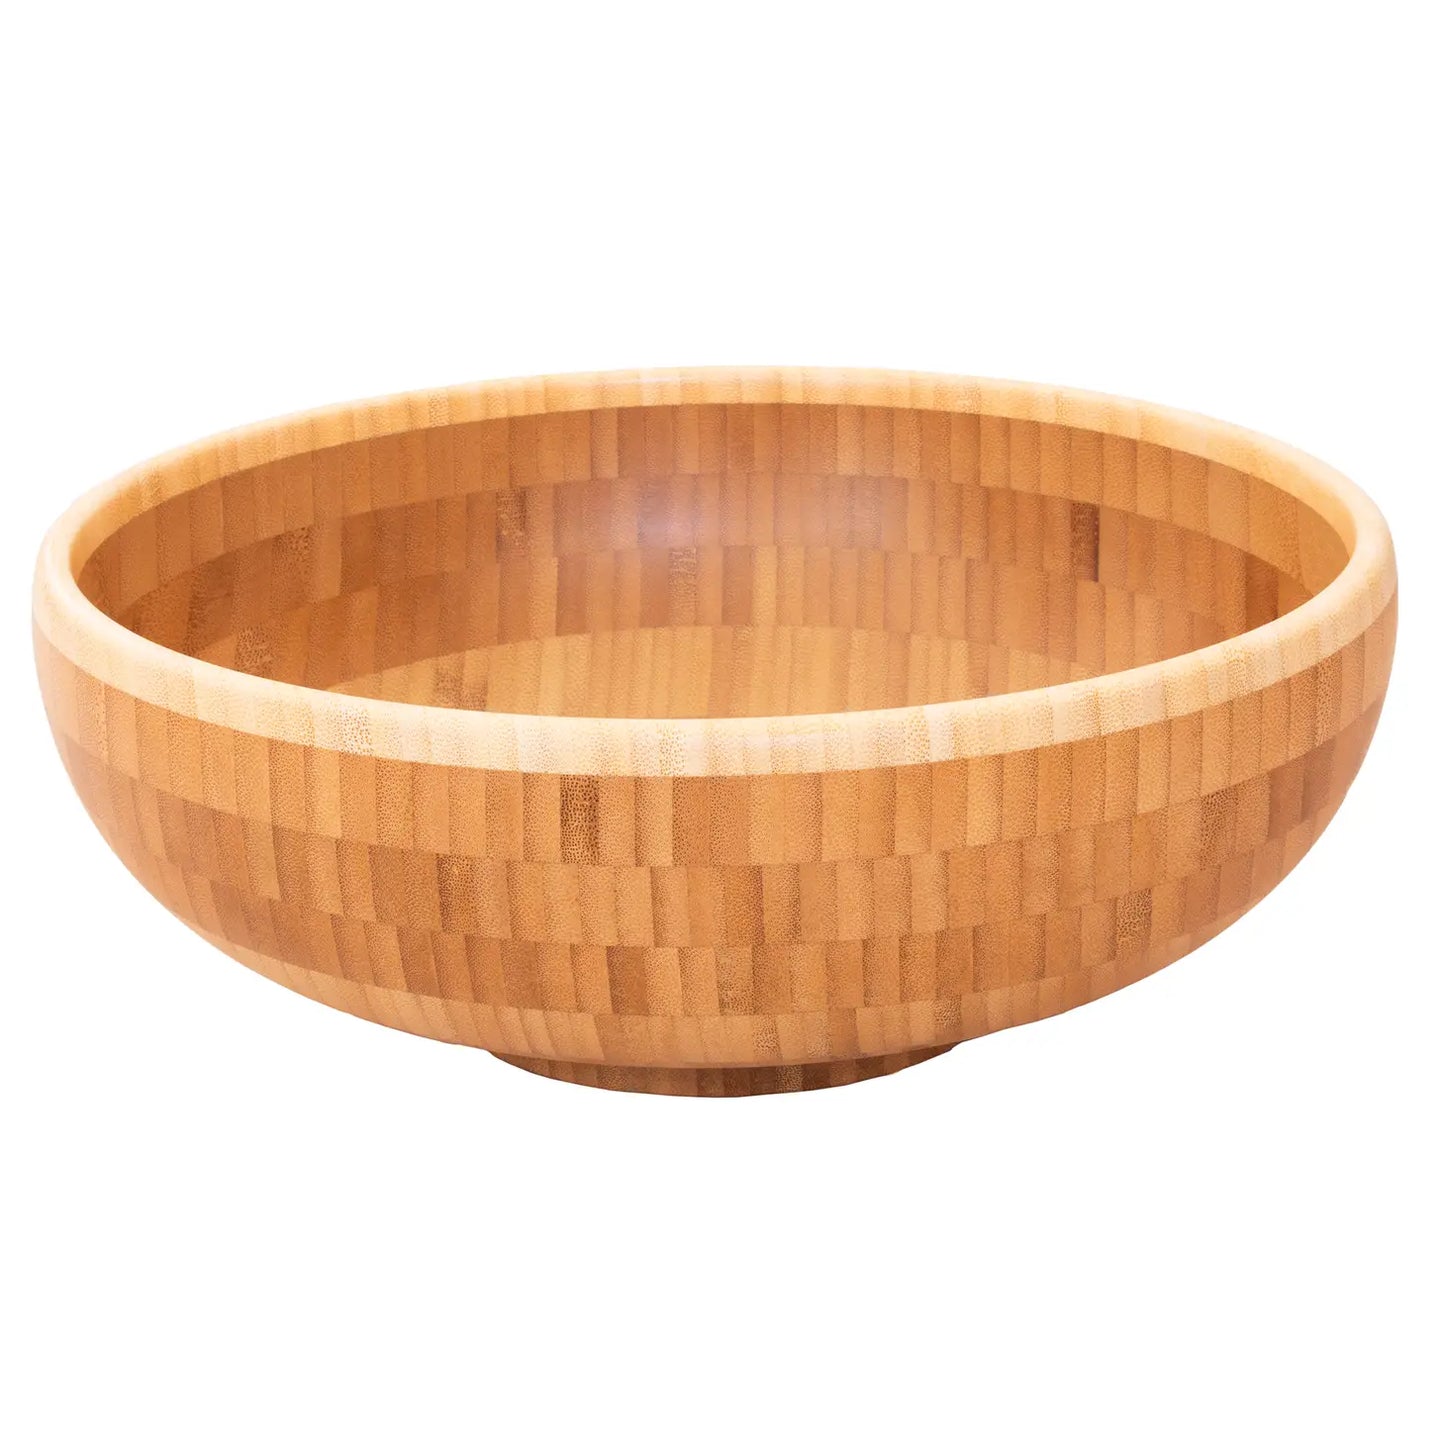 12” Bamboo Bowl